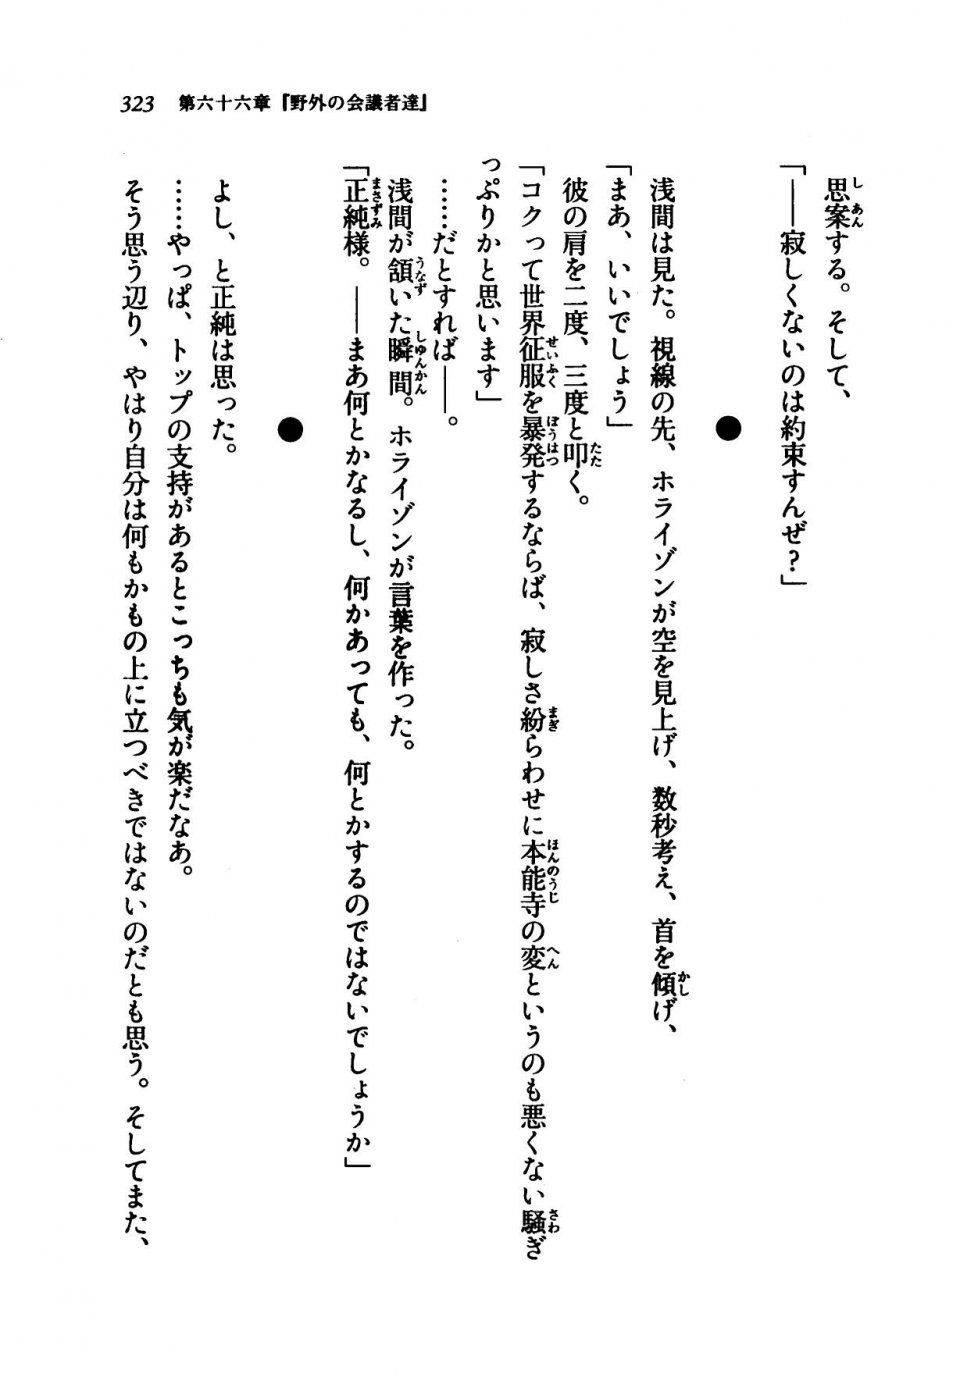 Kyoukai Senjou no Horizon LN Vol 21(8C) Part 1 - Photo #322